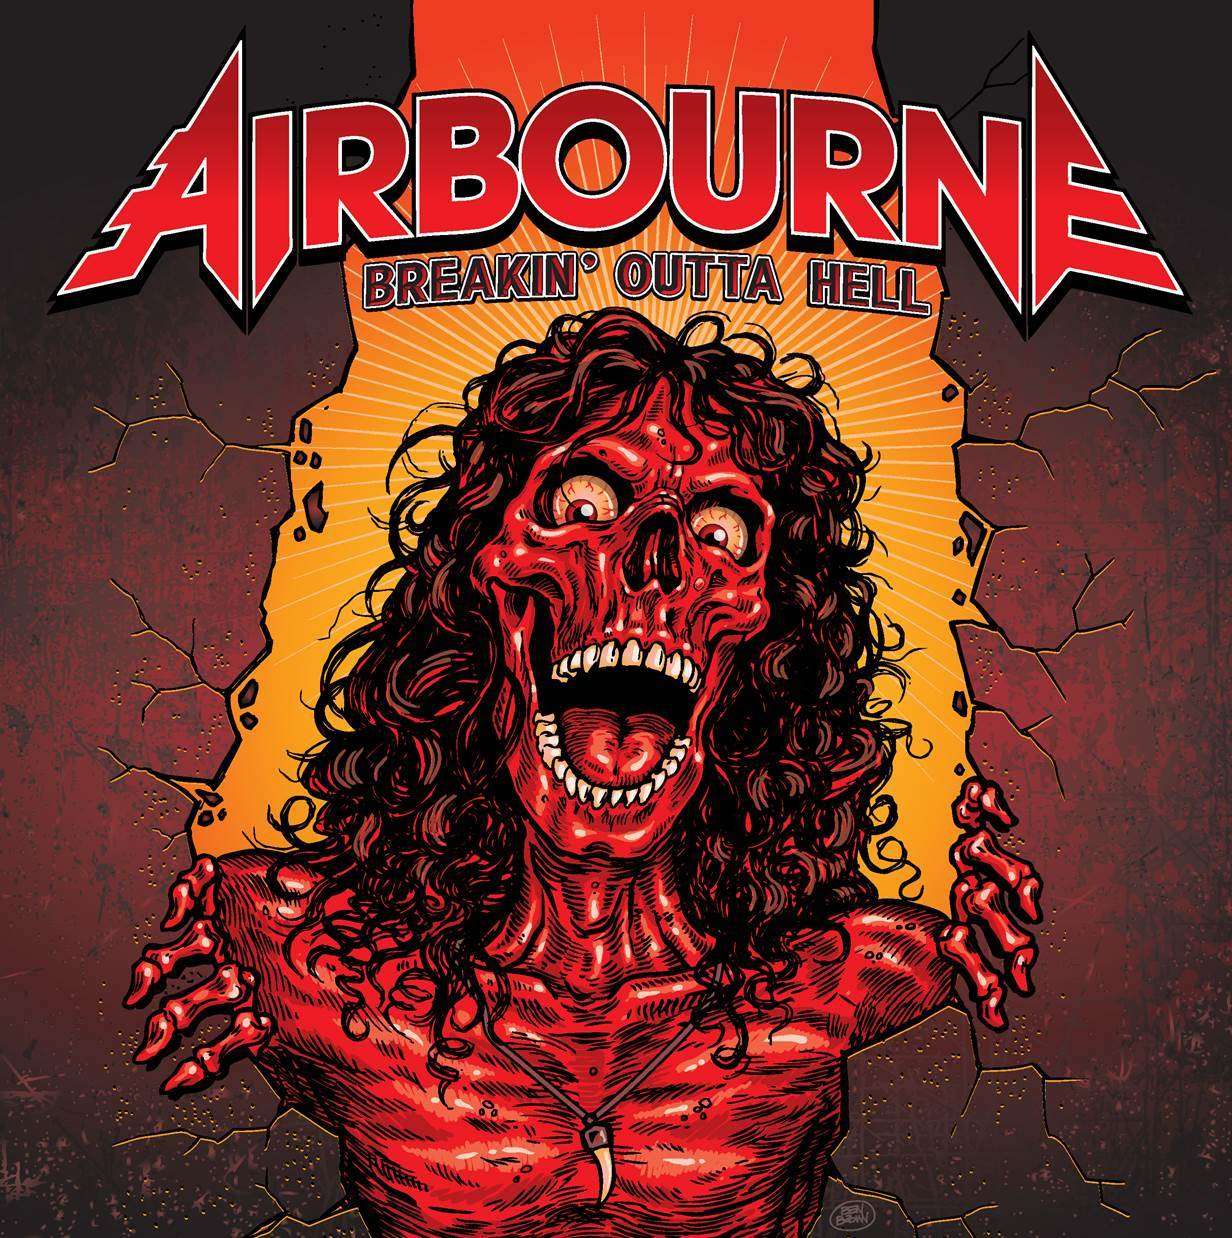 Okładka płyty winylowej artysty Airbourne o tytule Breakin' Outta Hell